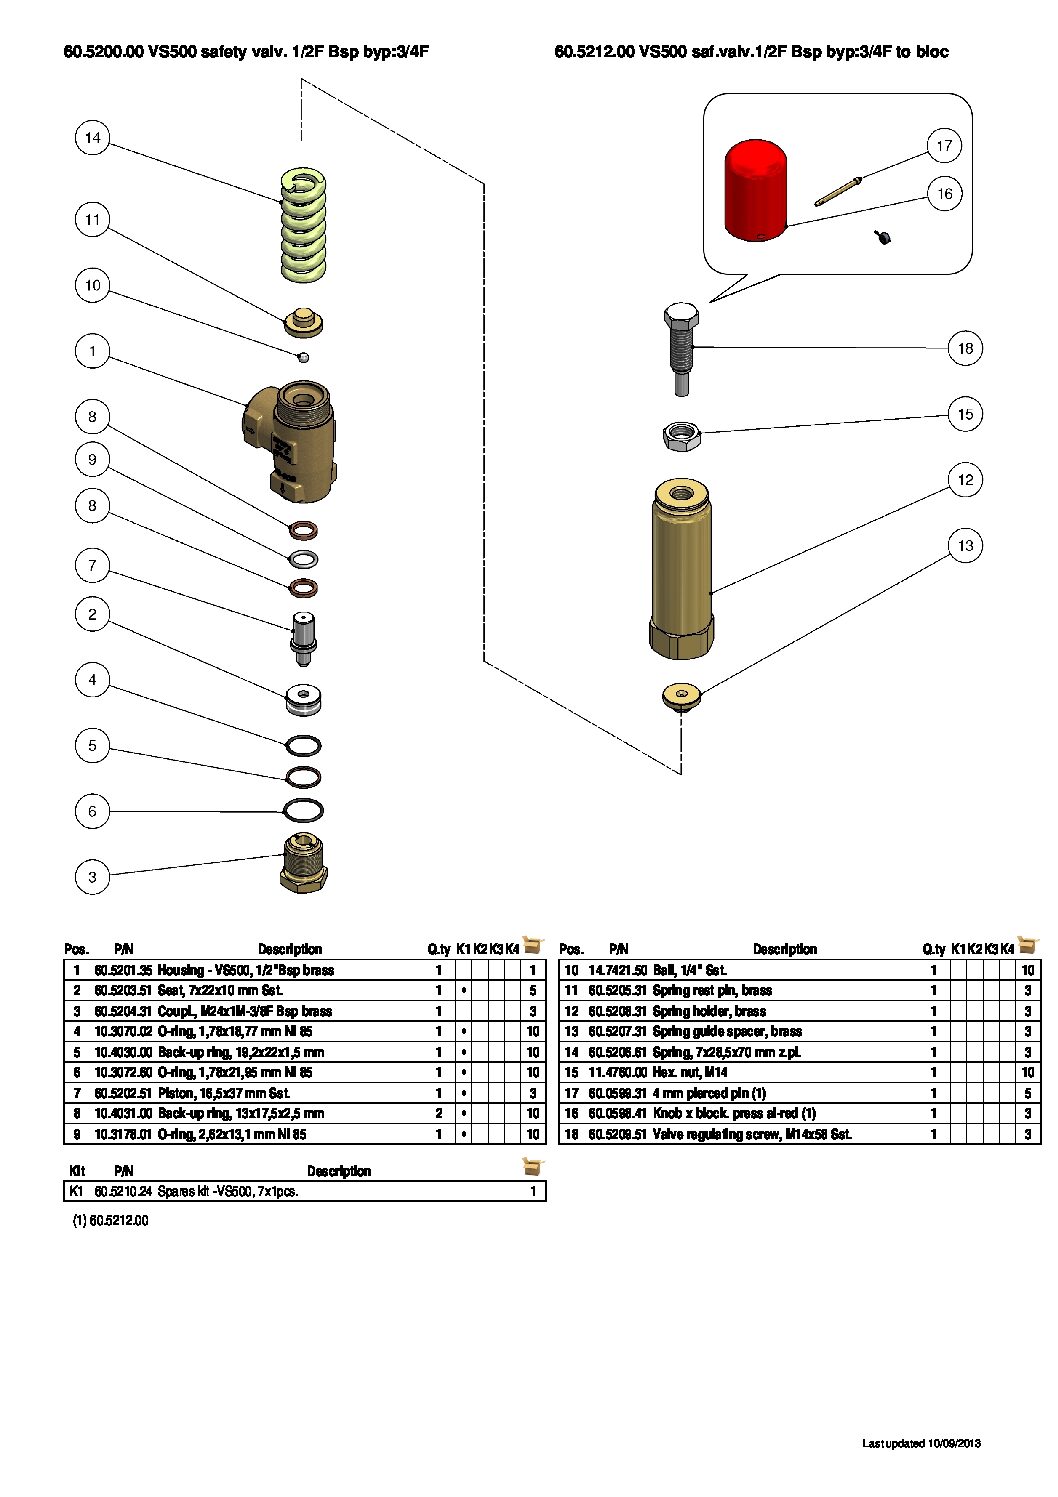 PA VS500 safety valve parts breakdown